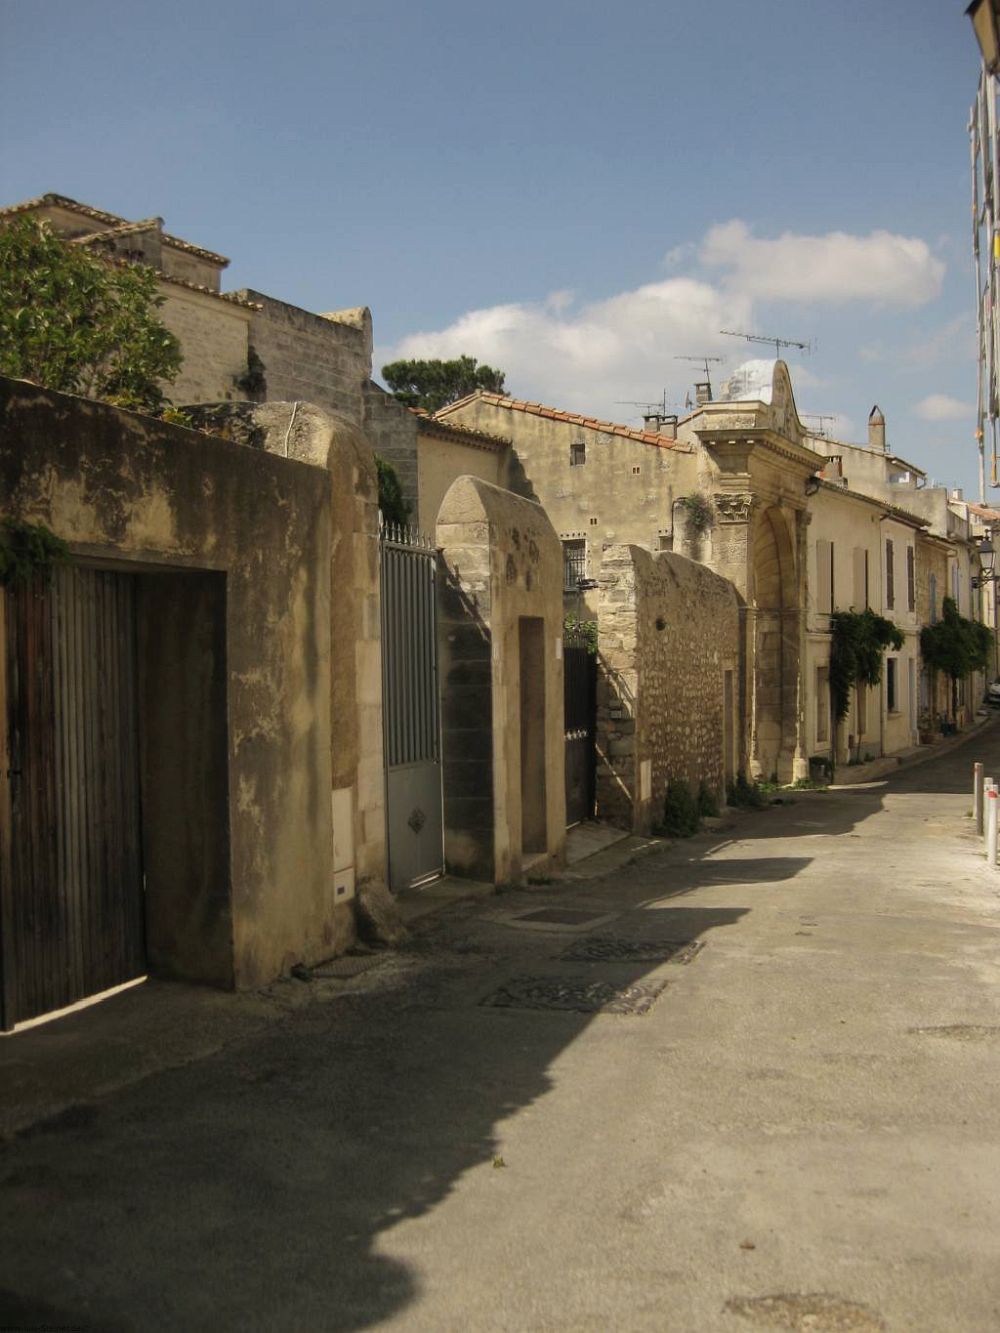 Innerhalb der alten Stadtmauer in Aigues-Mortes